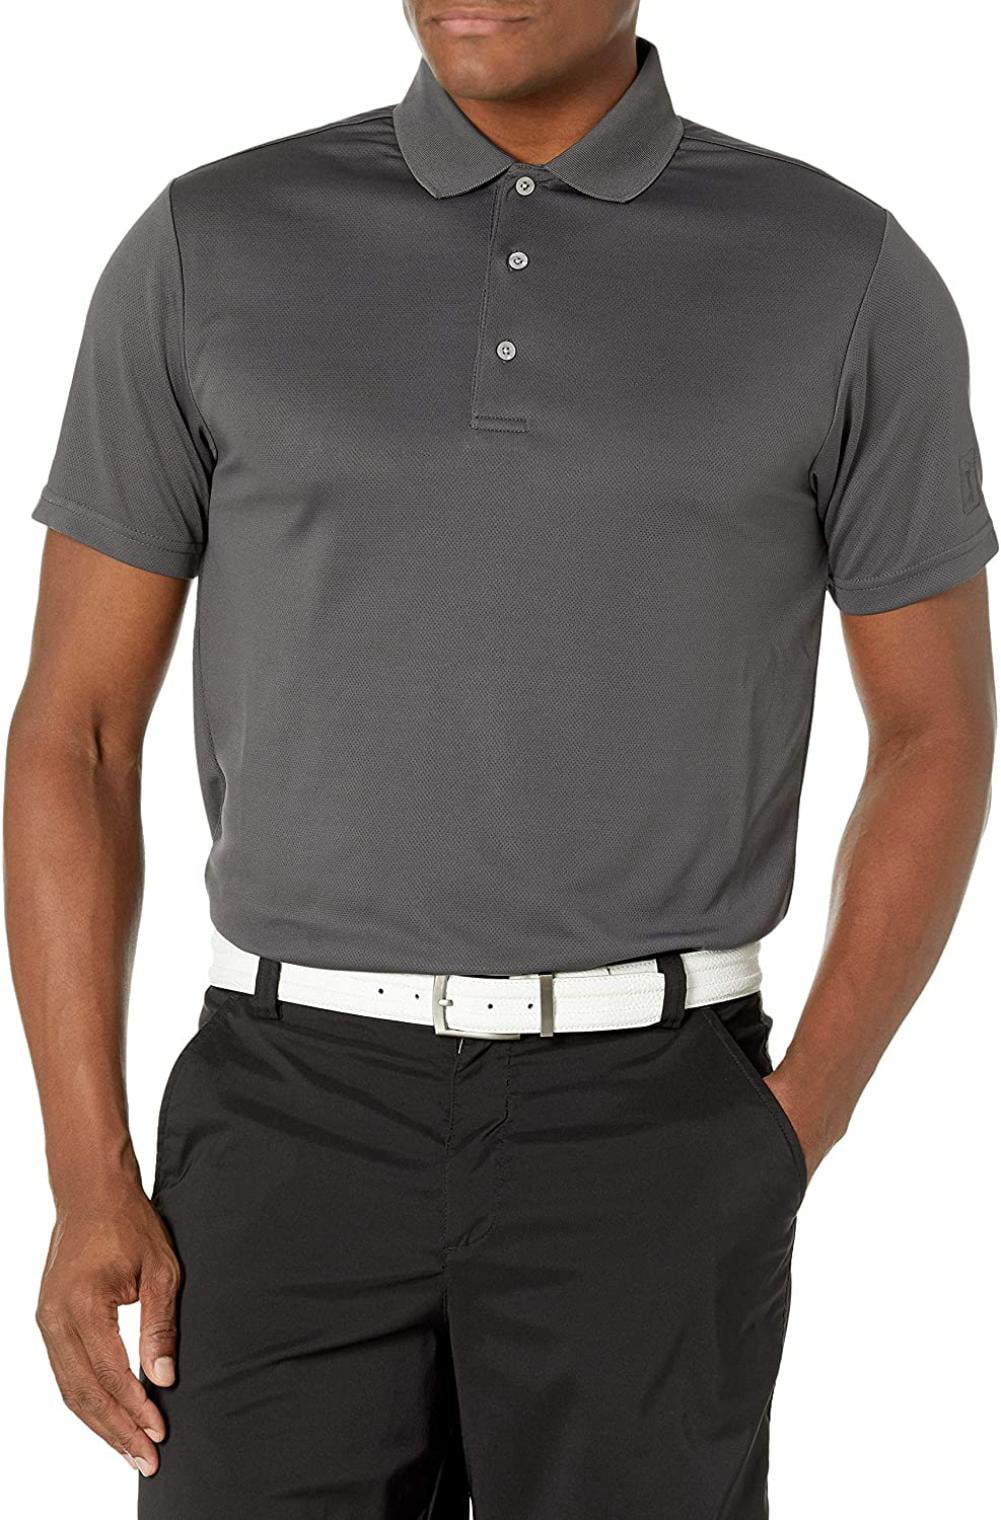 pga golf shirts on sale